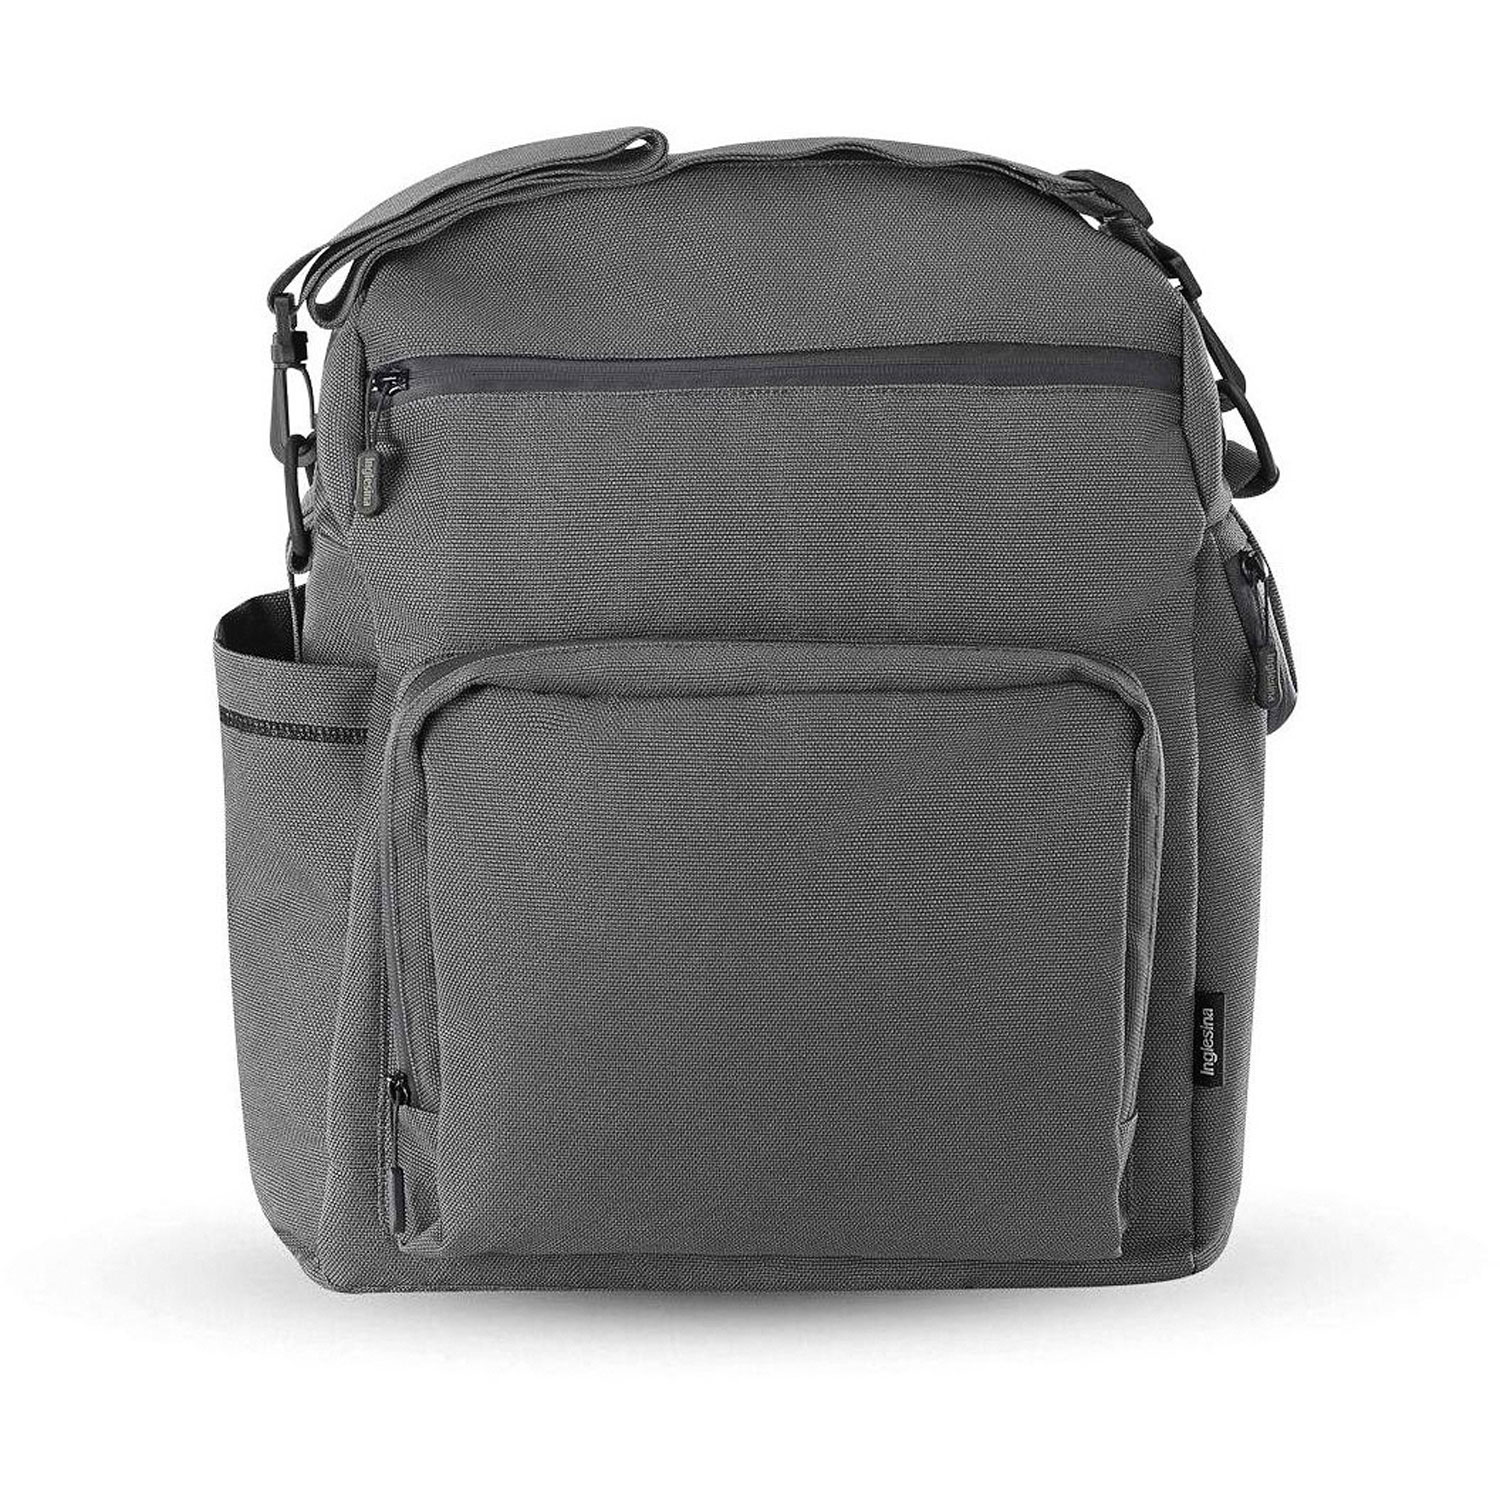 Сумка-рюкзак для коляски ADVENTURE BAG, цвет CHARCOAL GREY (2021) Inglesina сумка для коляски xt day bag horizon grey inglesina